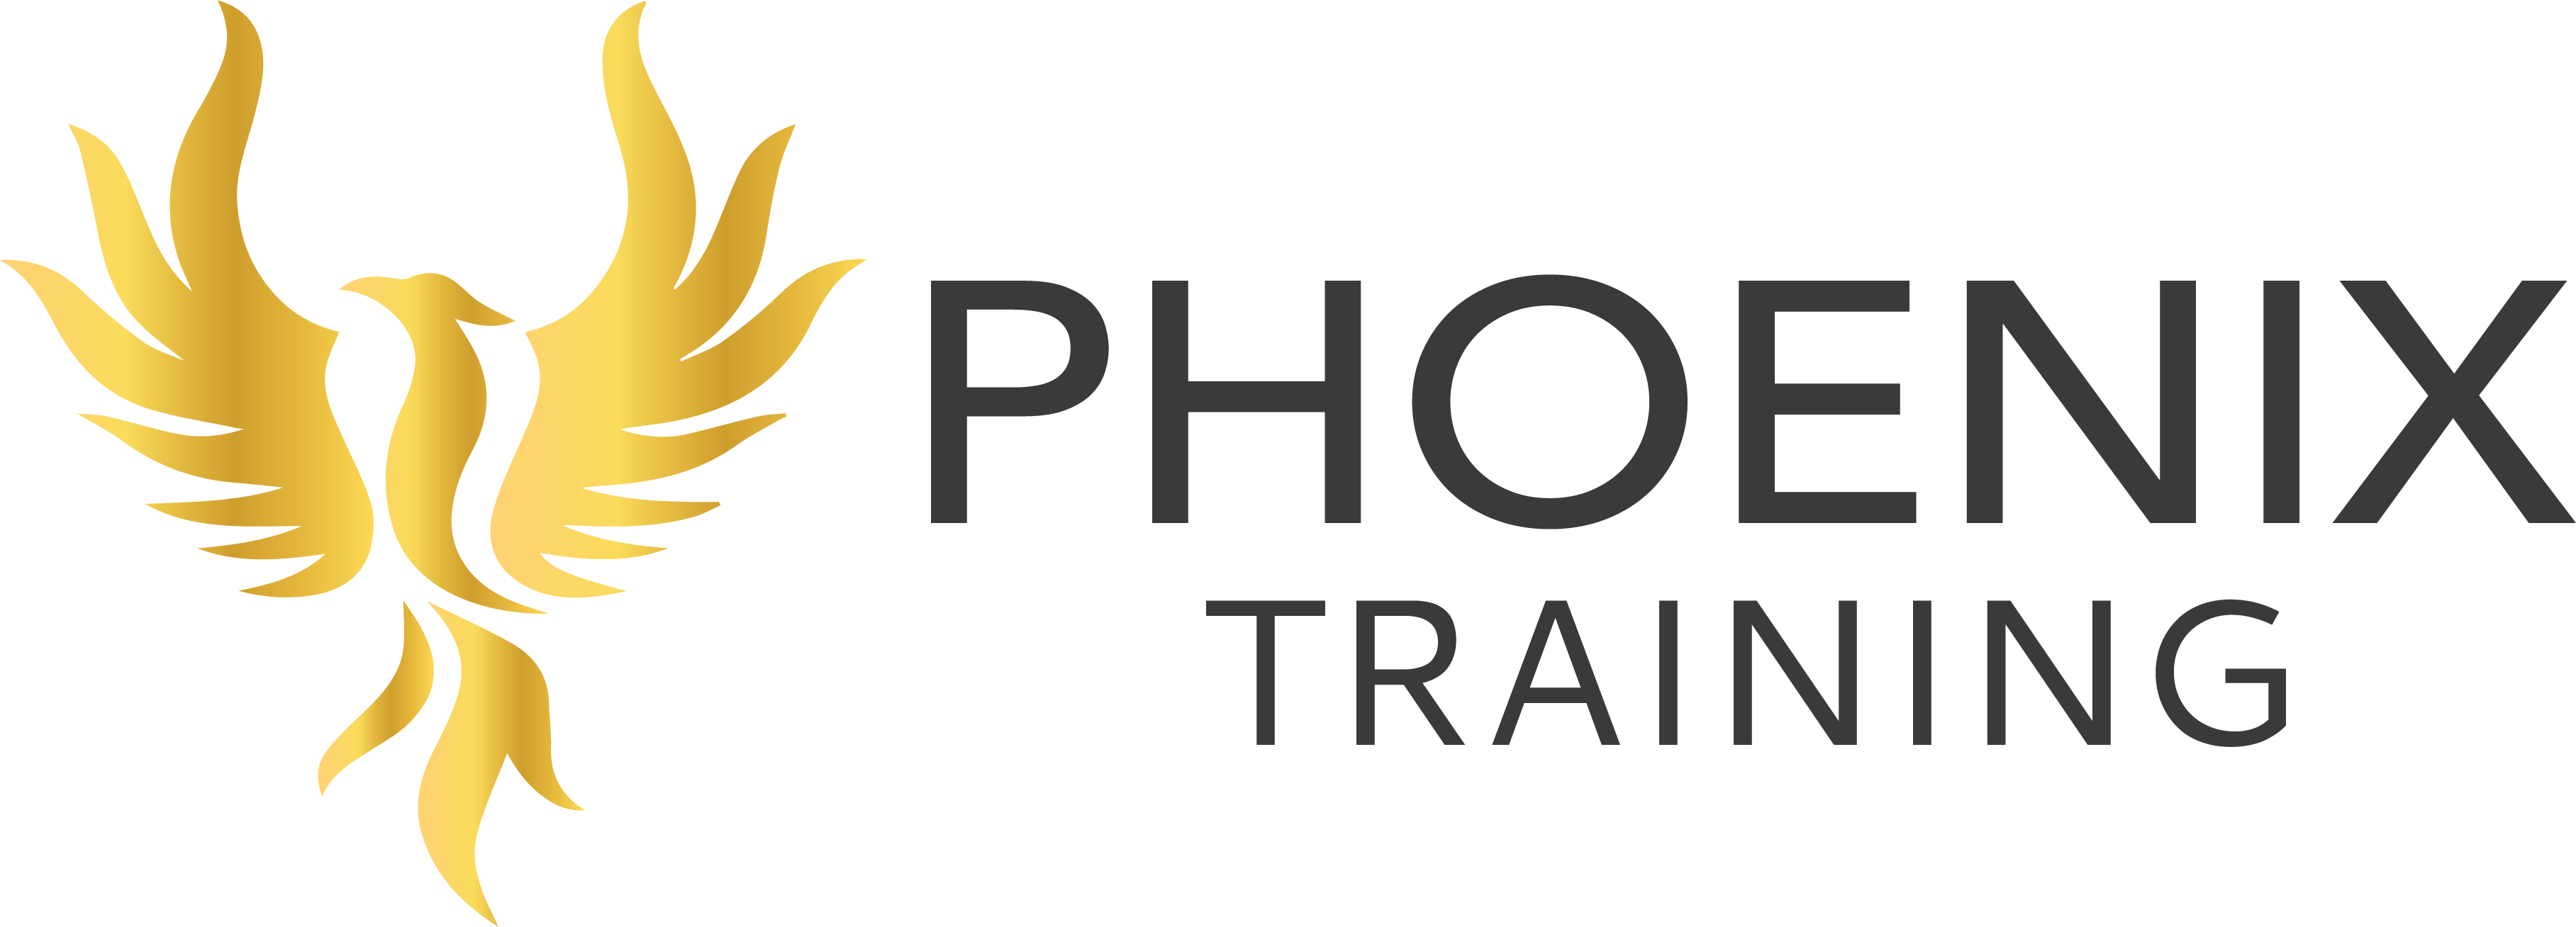 Golden Phoenix Logo Linear